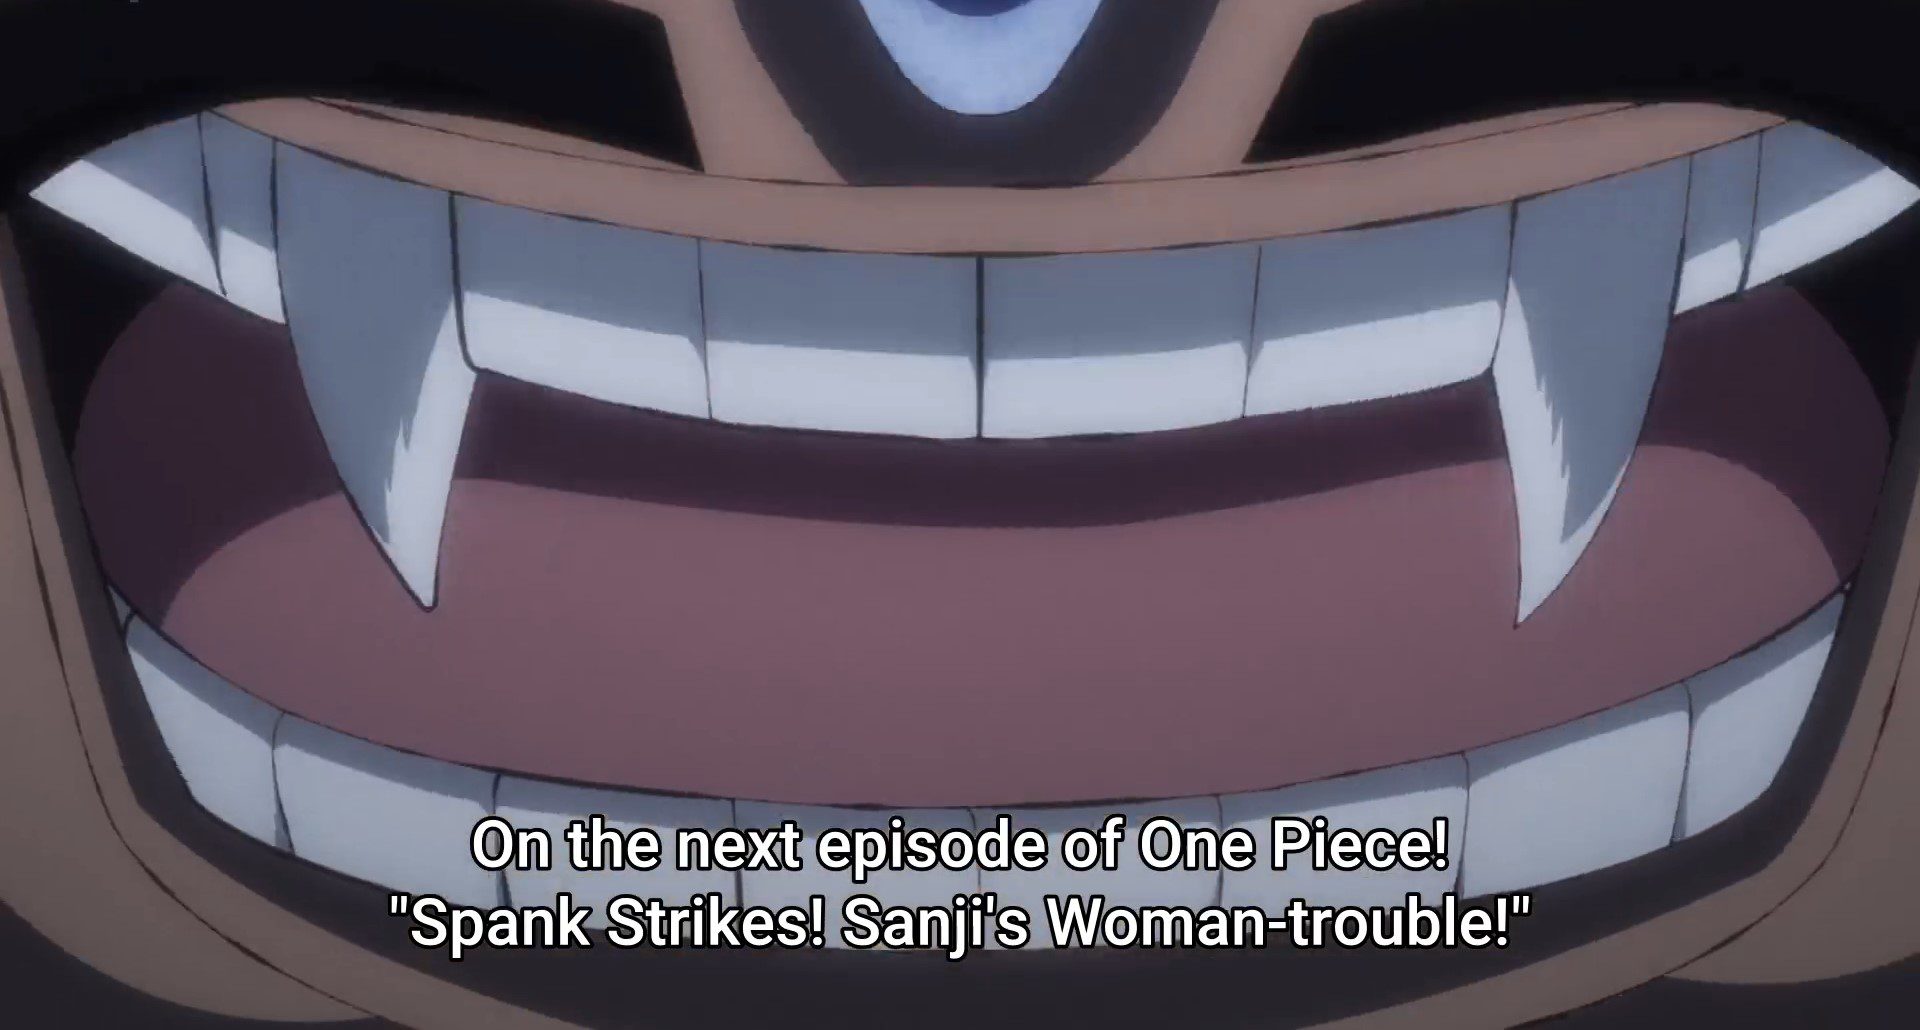 One Piece Episode 1021 - Spank Strikes! Sanji's Woman-trouble